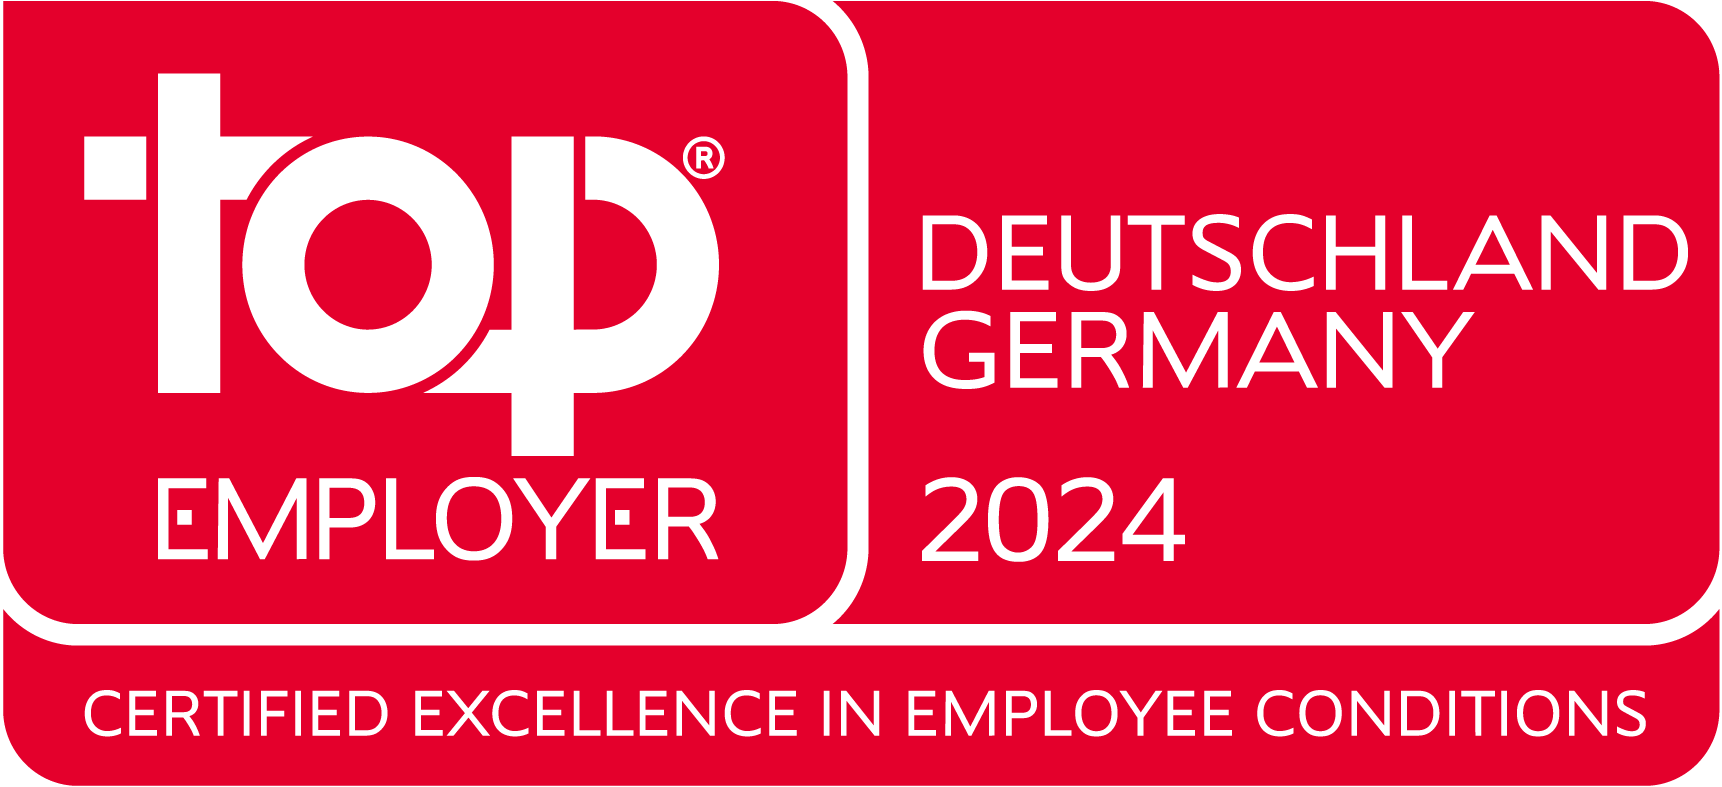 Webasto - Top Employer Germany 2023